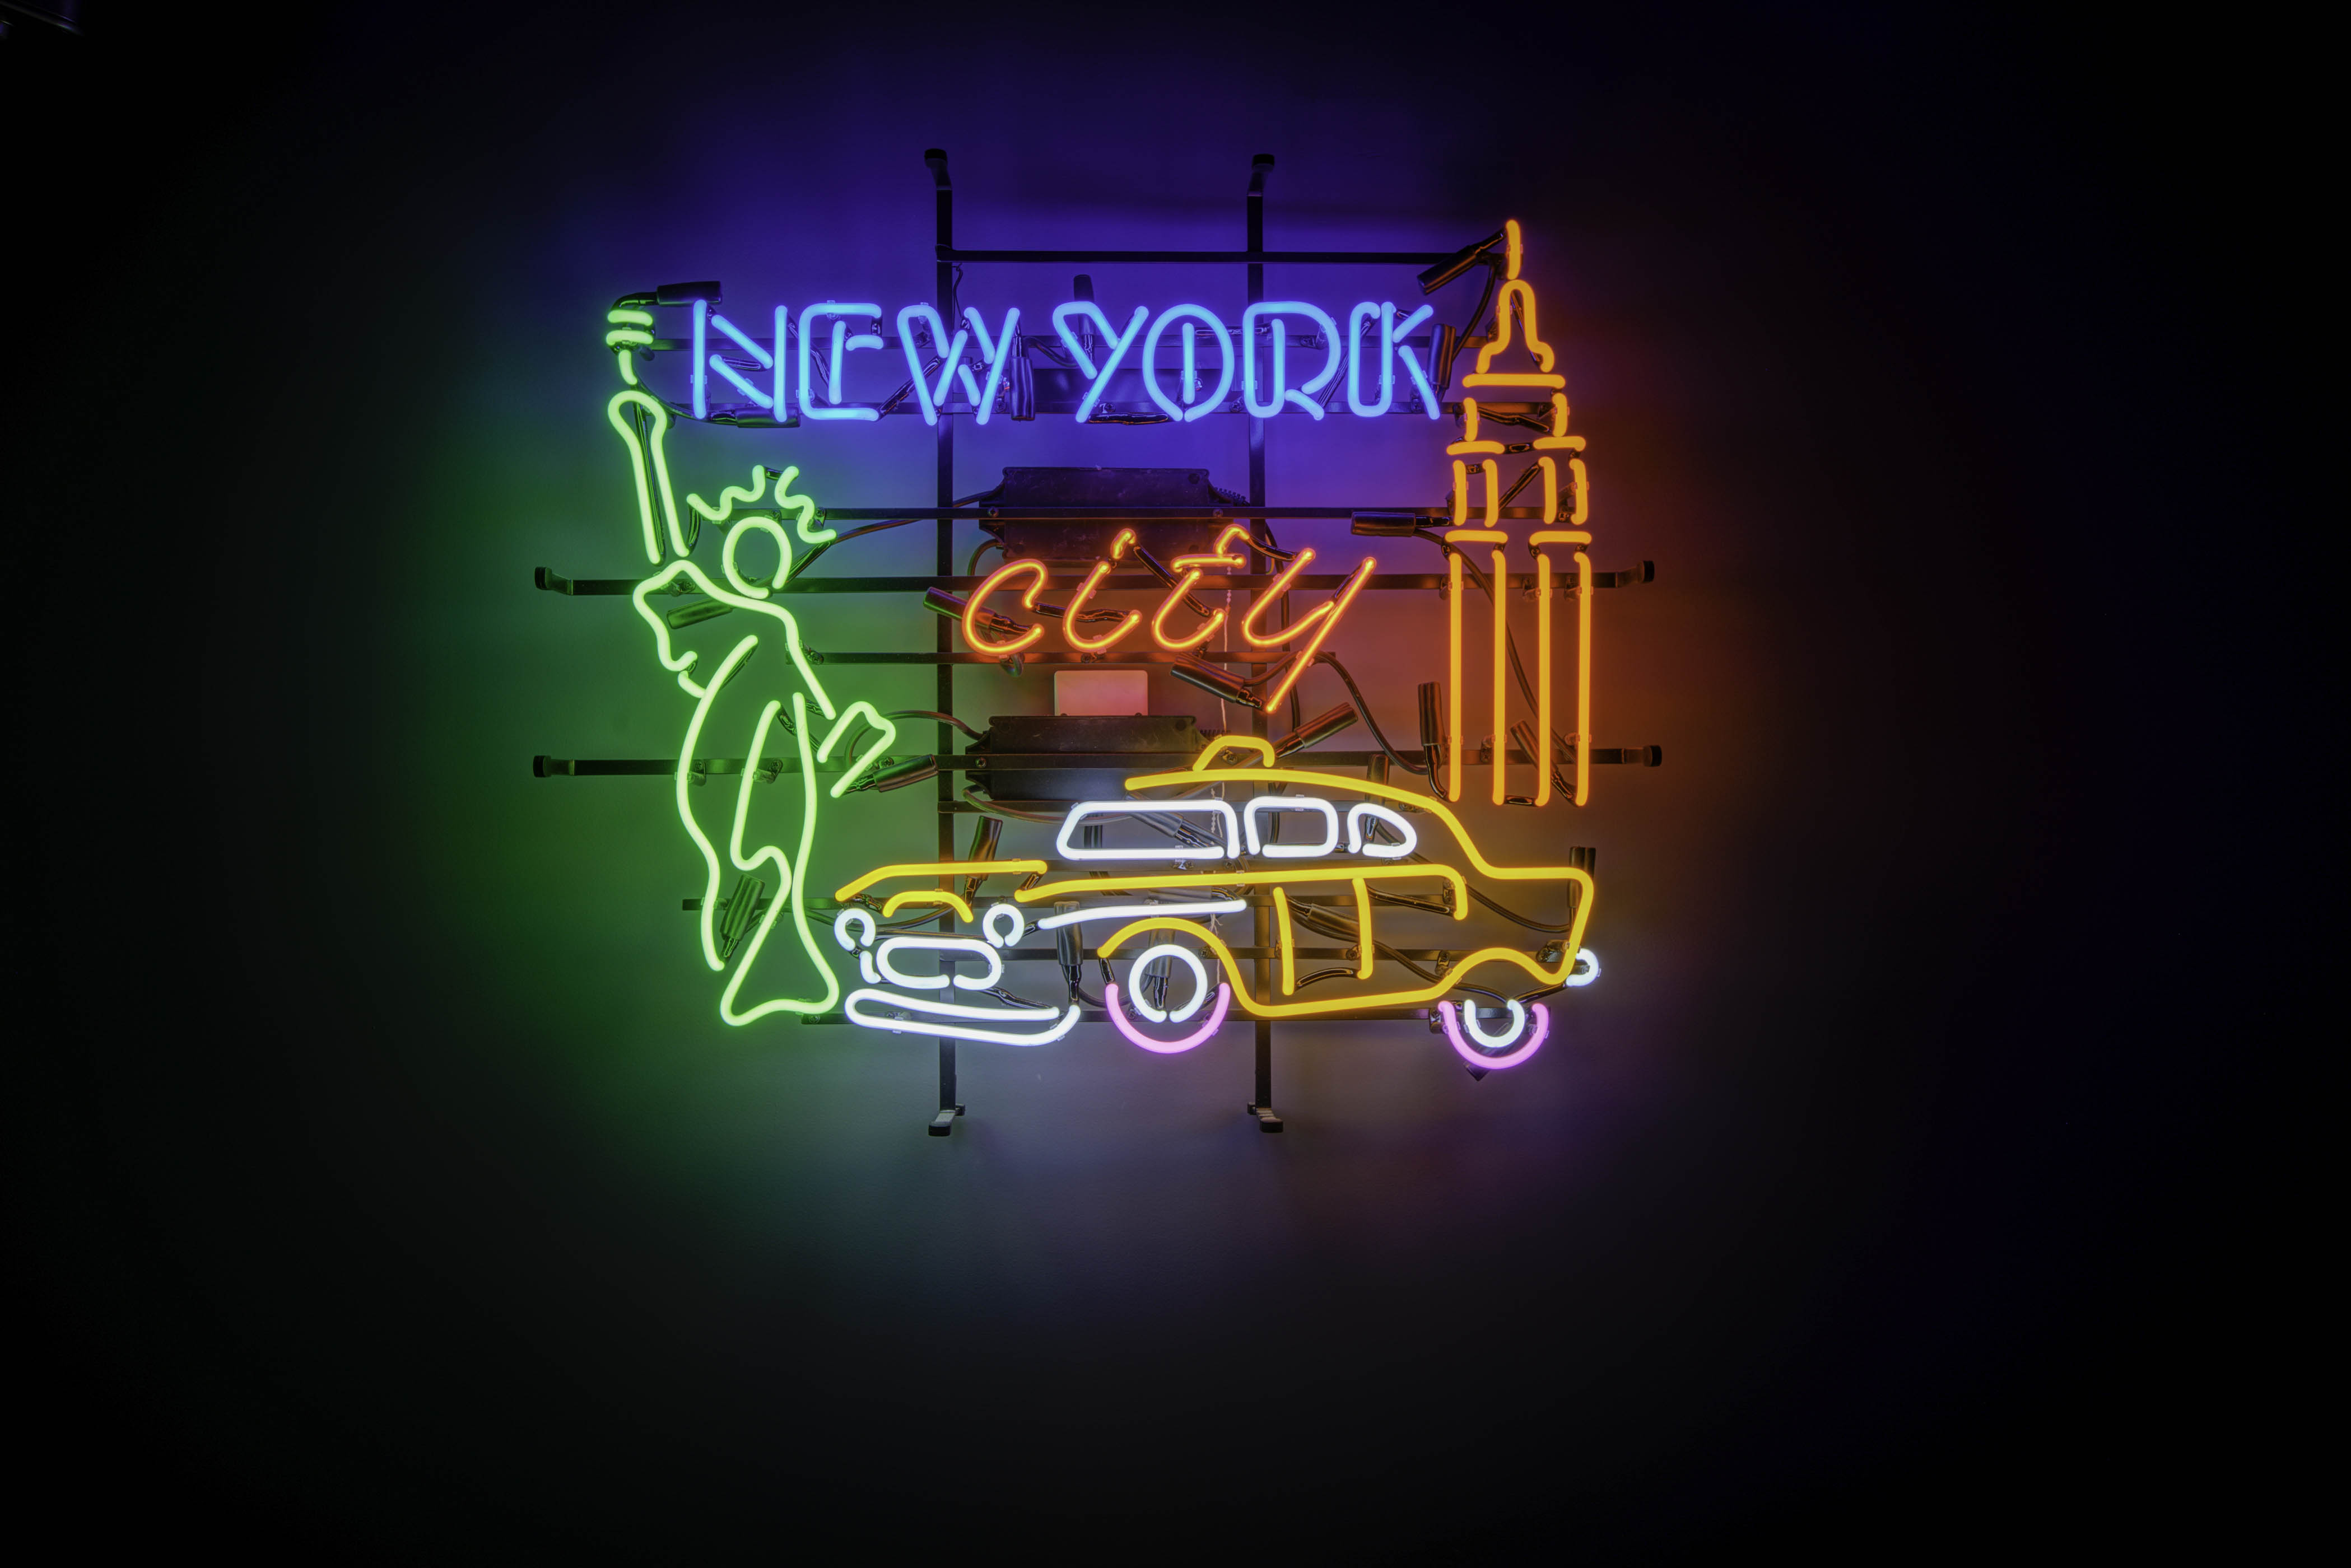 Eclairage d'ambiance du box New York du Karioka, néon